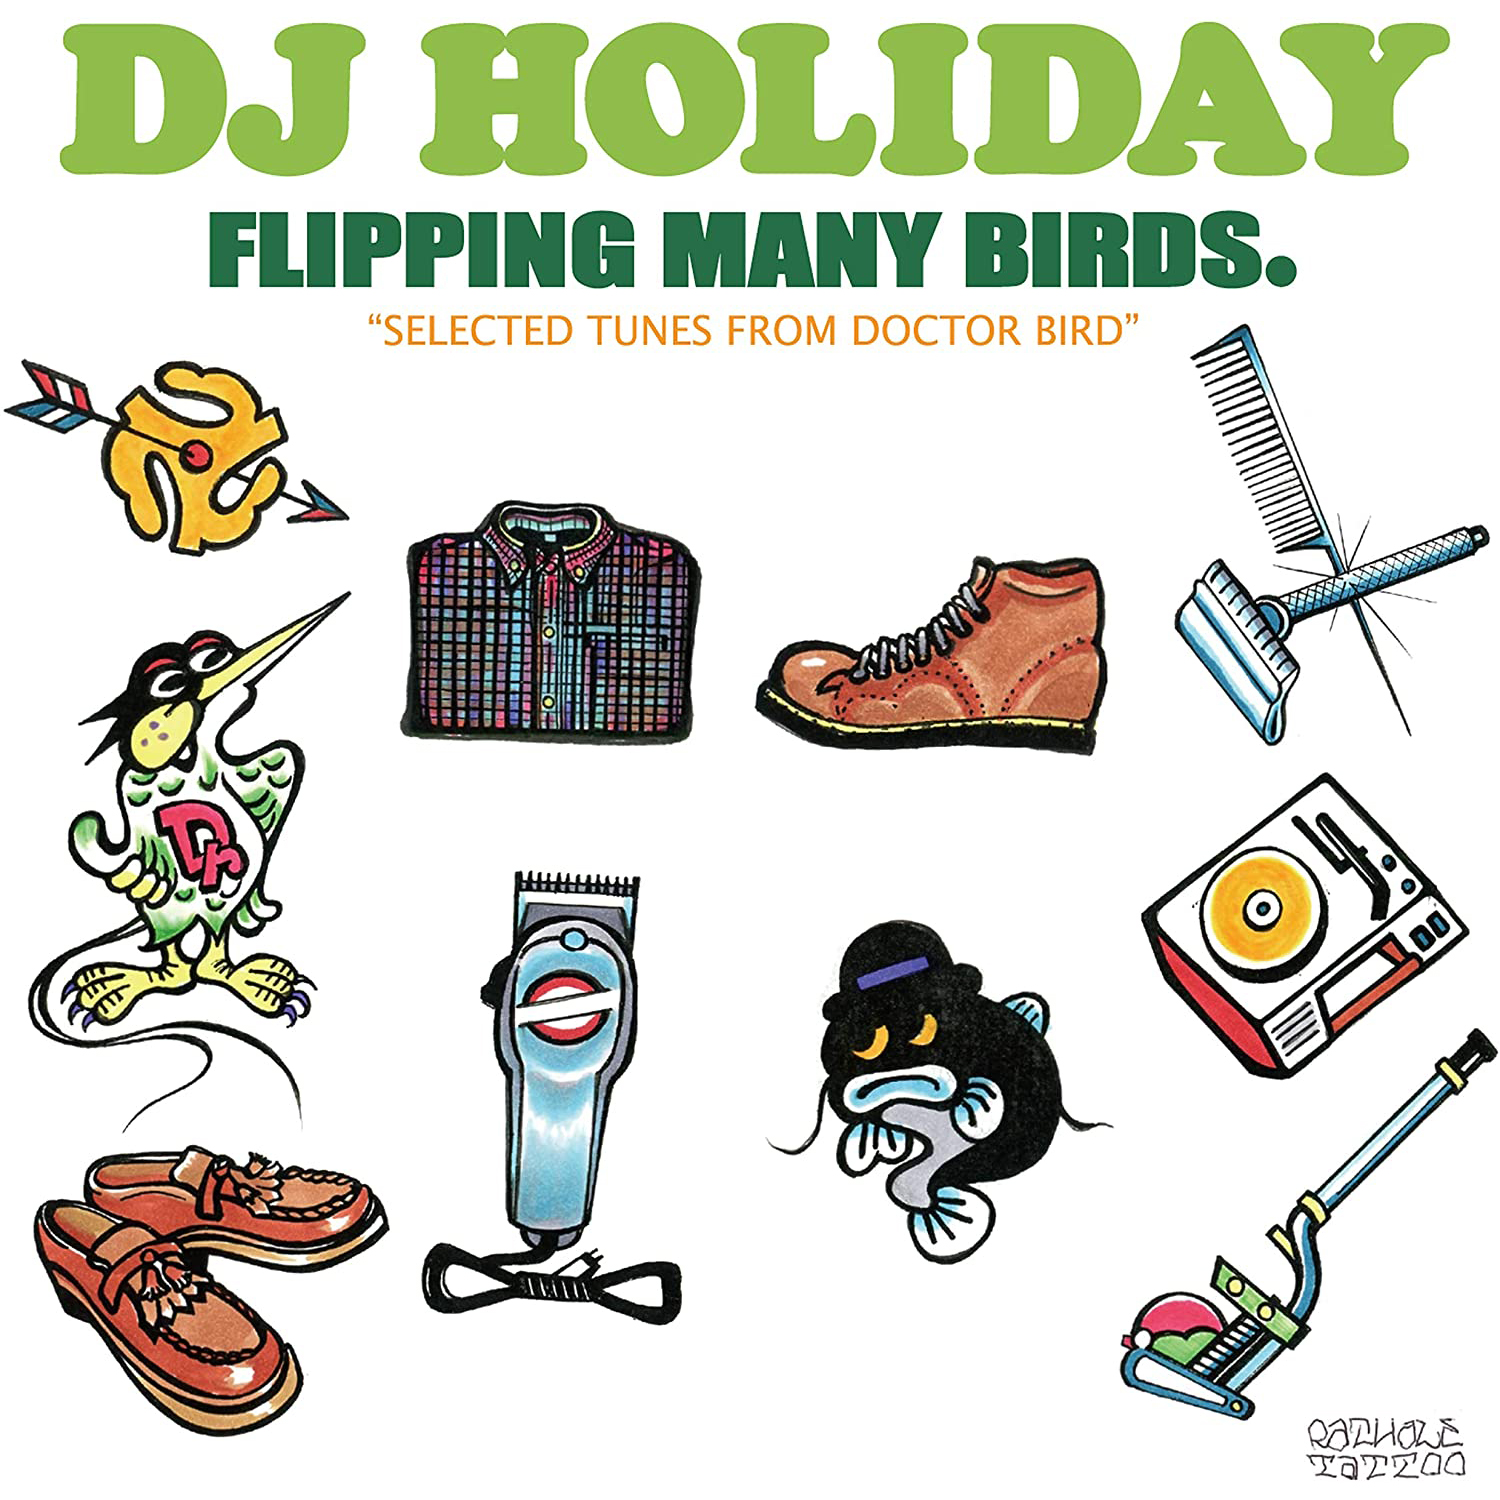 DJ HOLIDAY 'Flipping Many Birds. "Selected Tunes From Doctor Bird"'